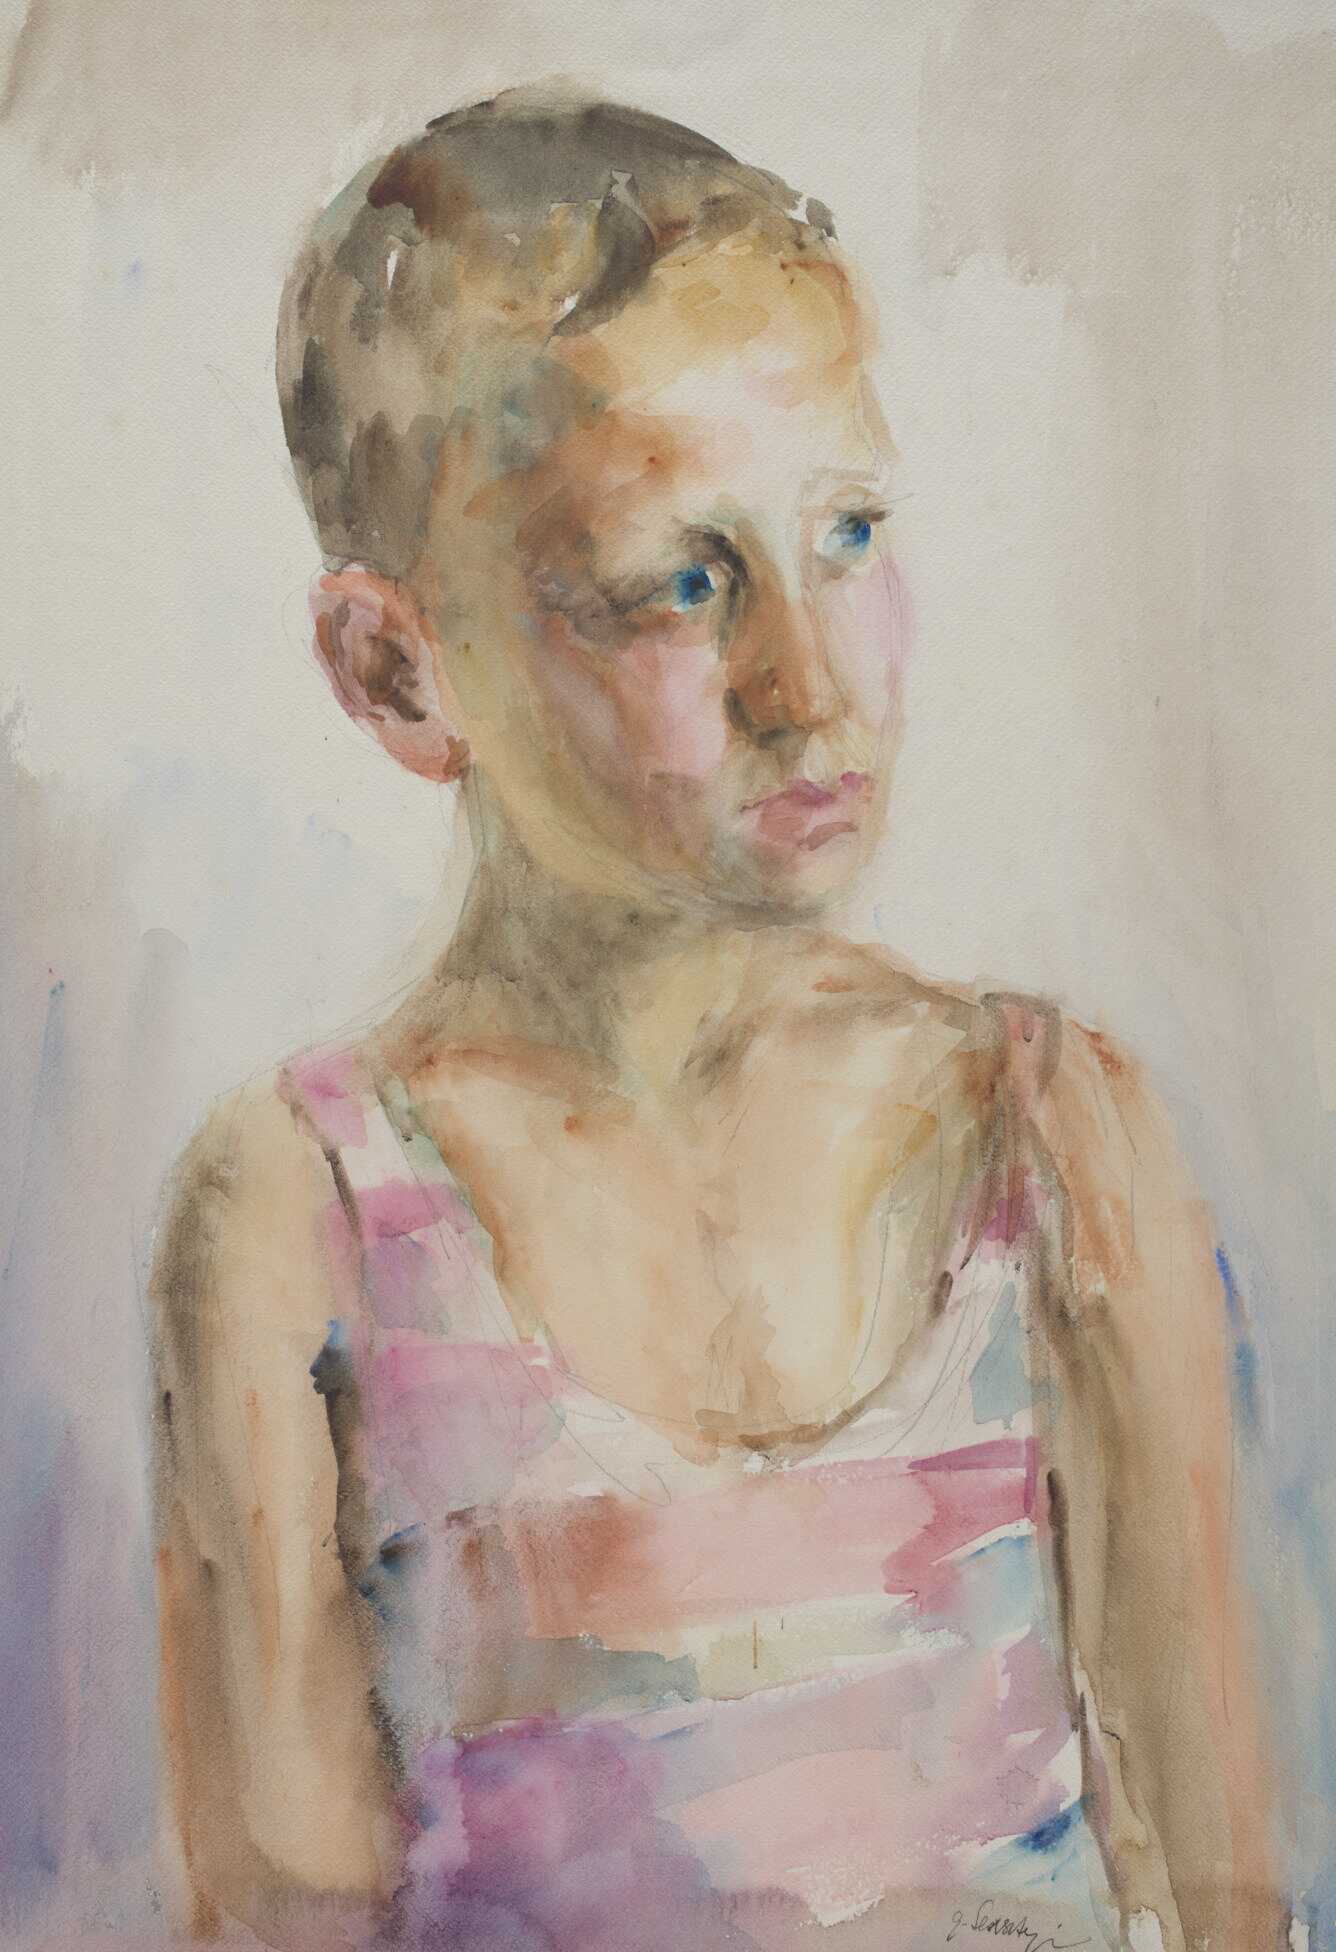 Portrét chlapce by Gela Seksztajn - 1932-1943 - 54.5 x 37.6 cm 